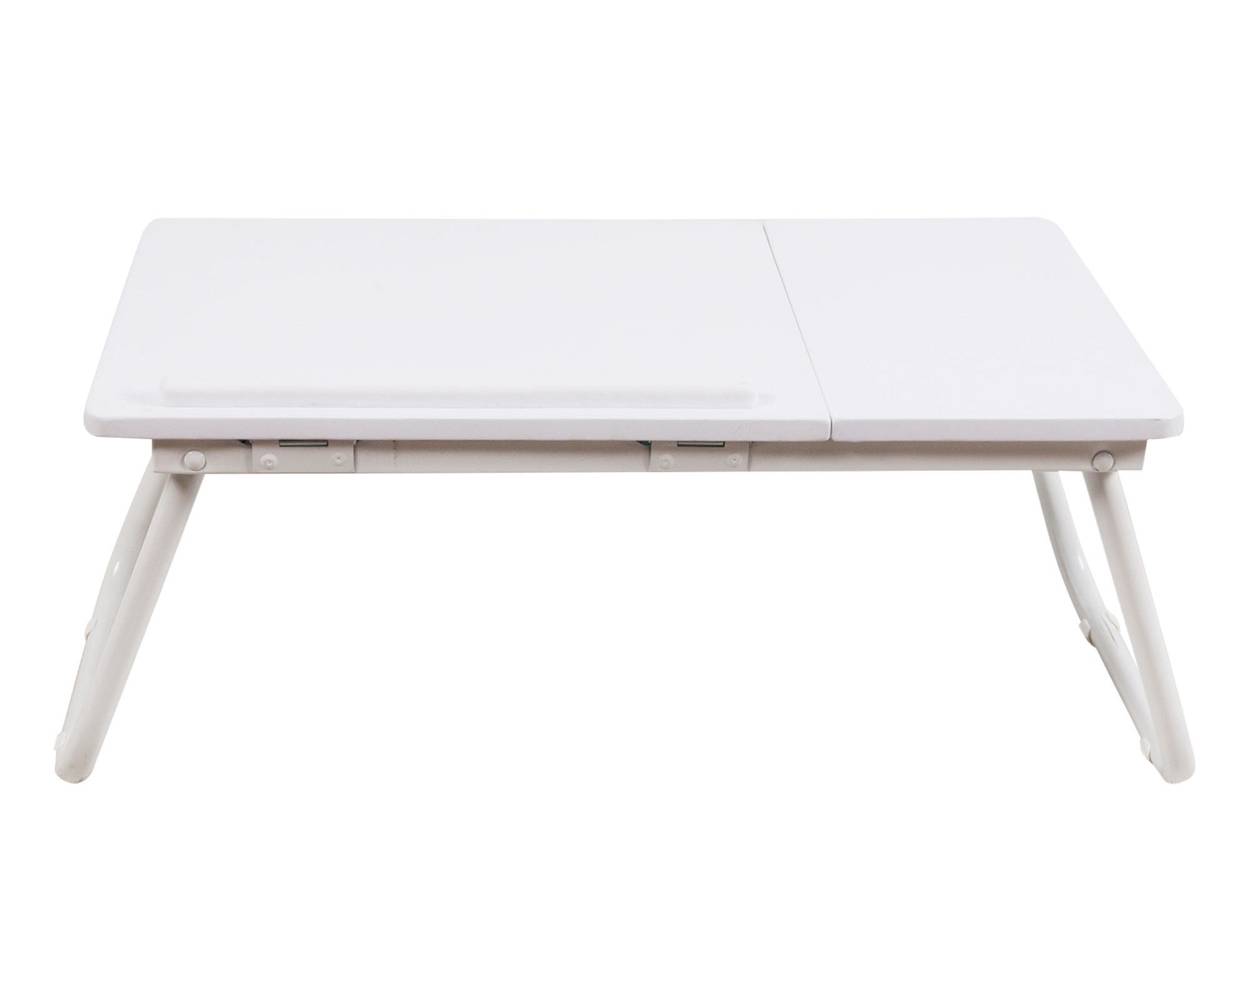 M+design mesa computador plegable blanco (55 x 32 x 24 cm)